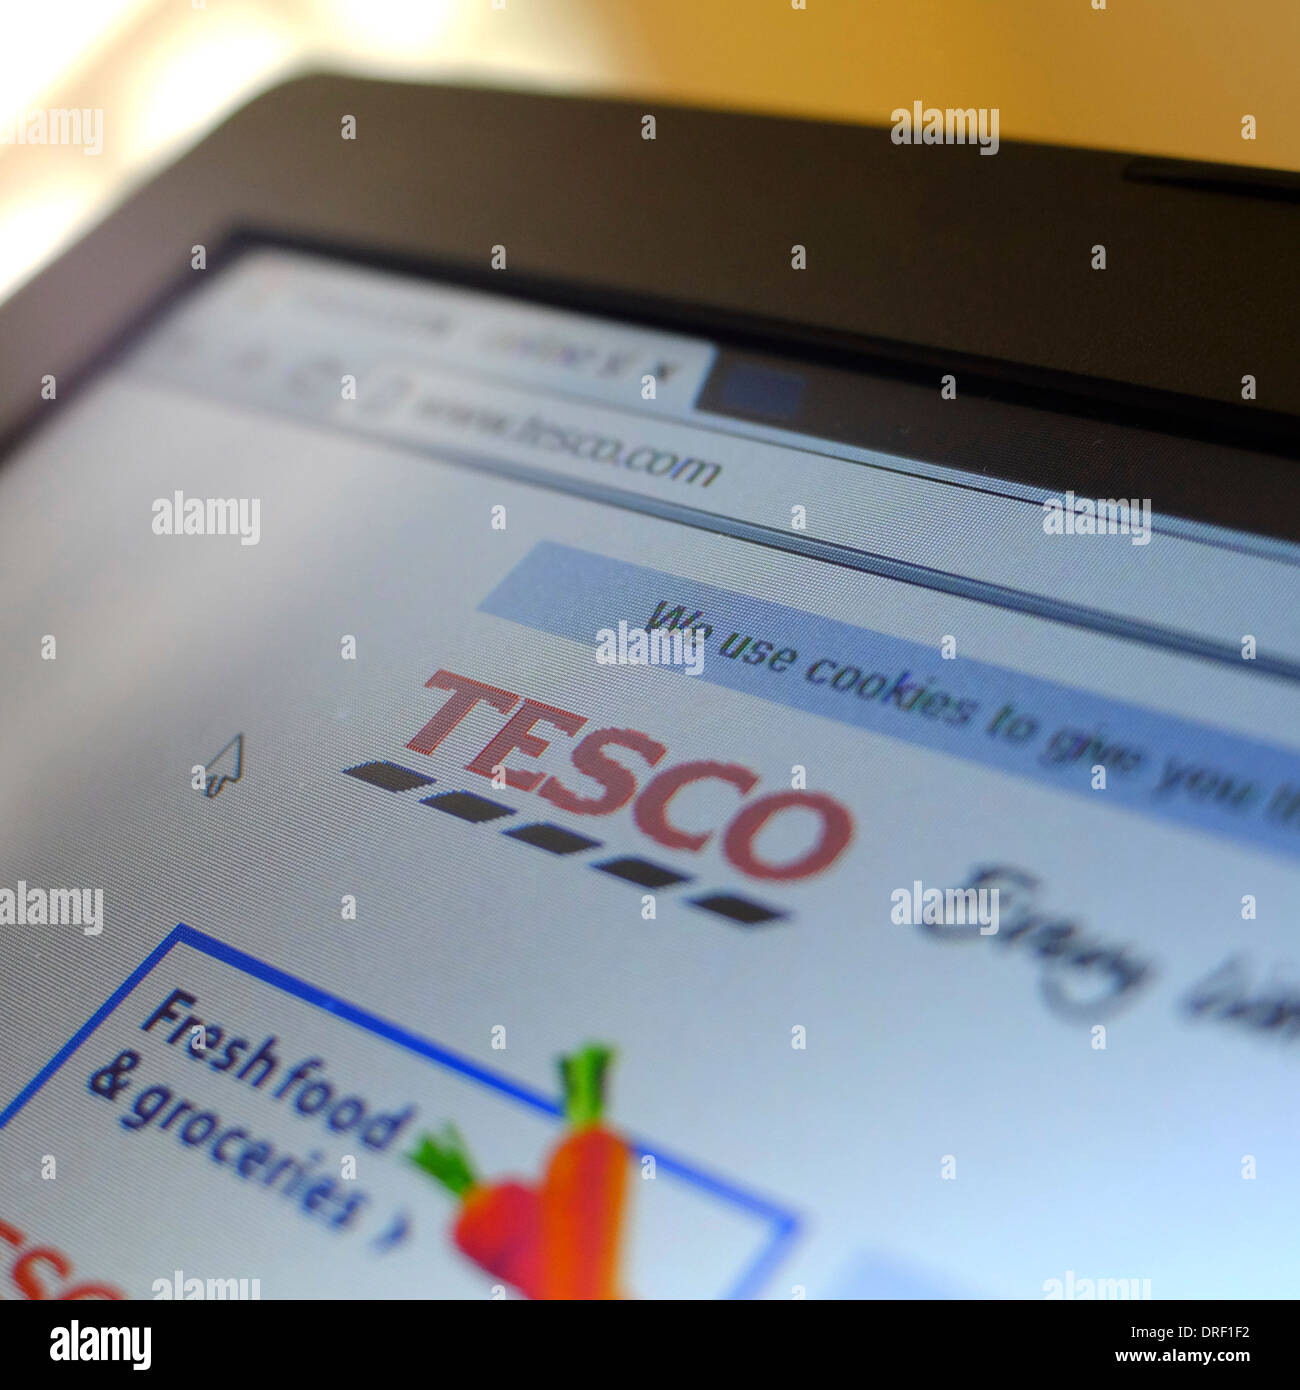 Tesco Internet shopping website on laptop Stock Photo